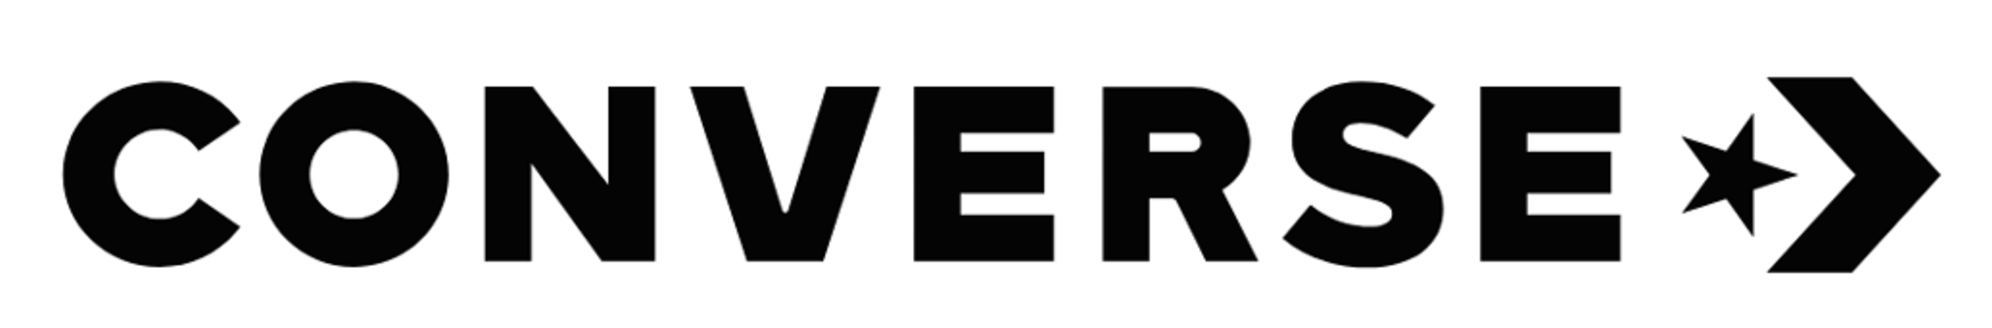 converse new logo 2017